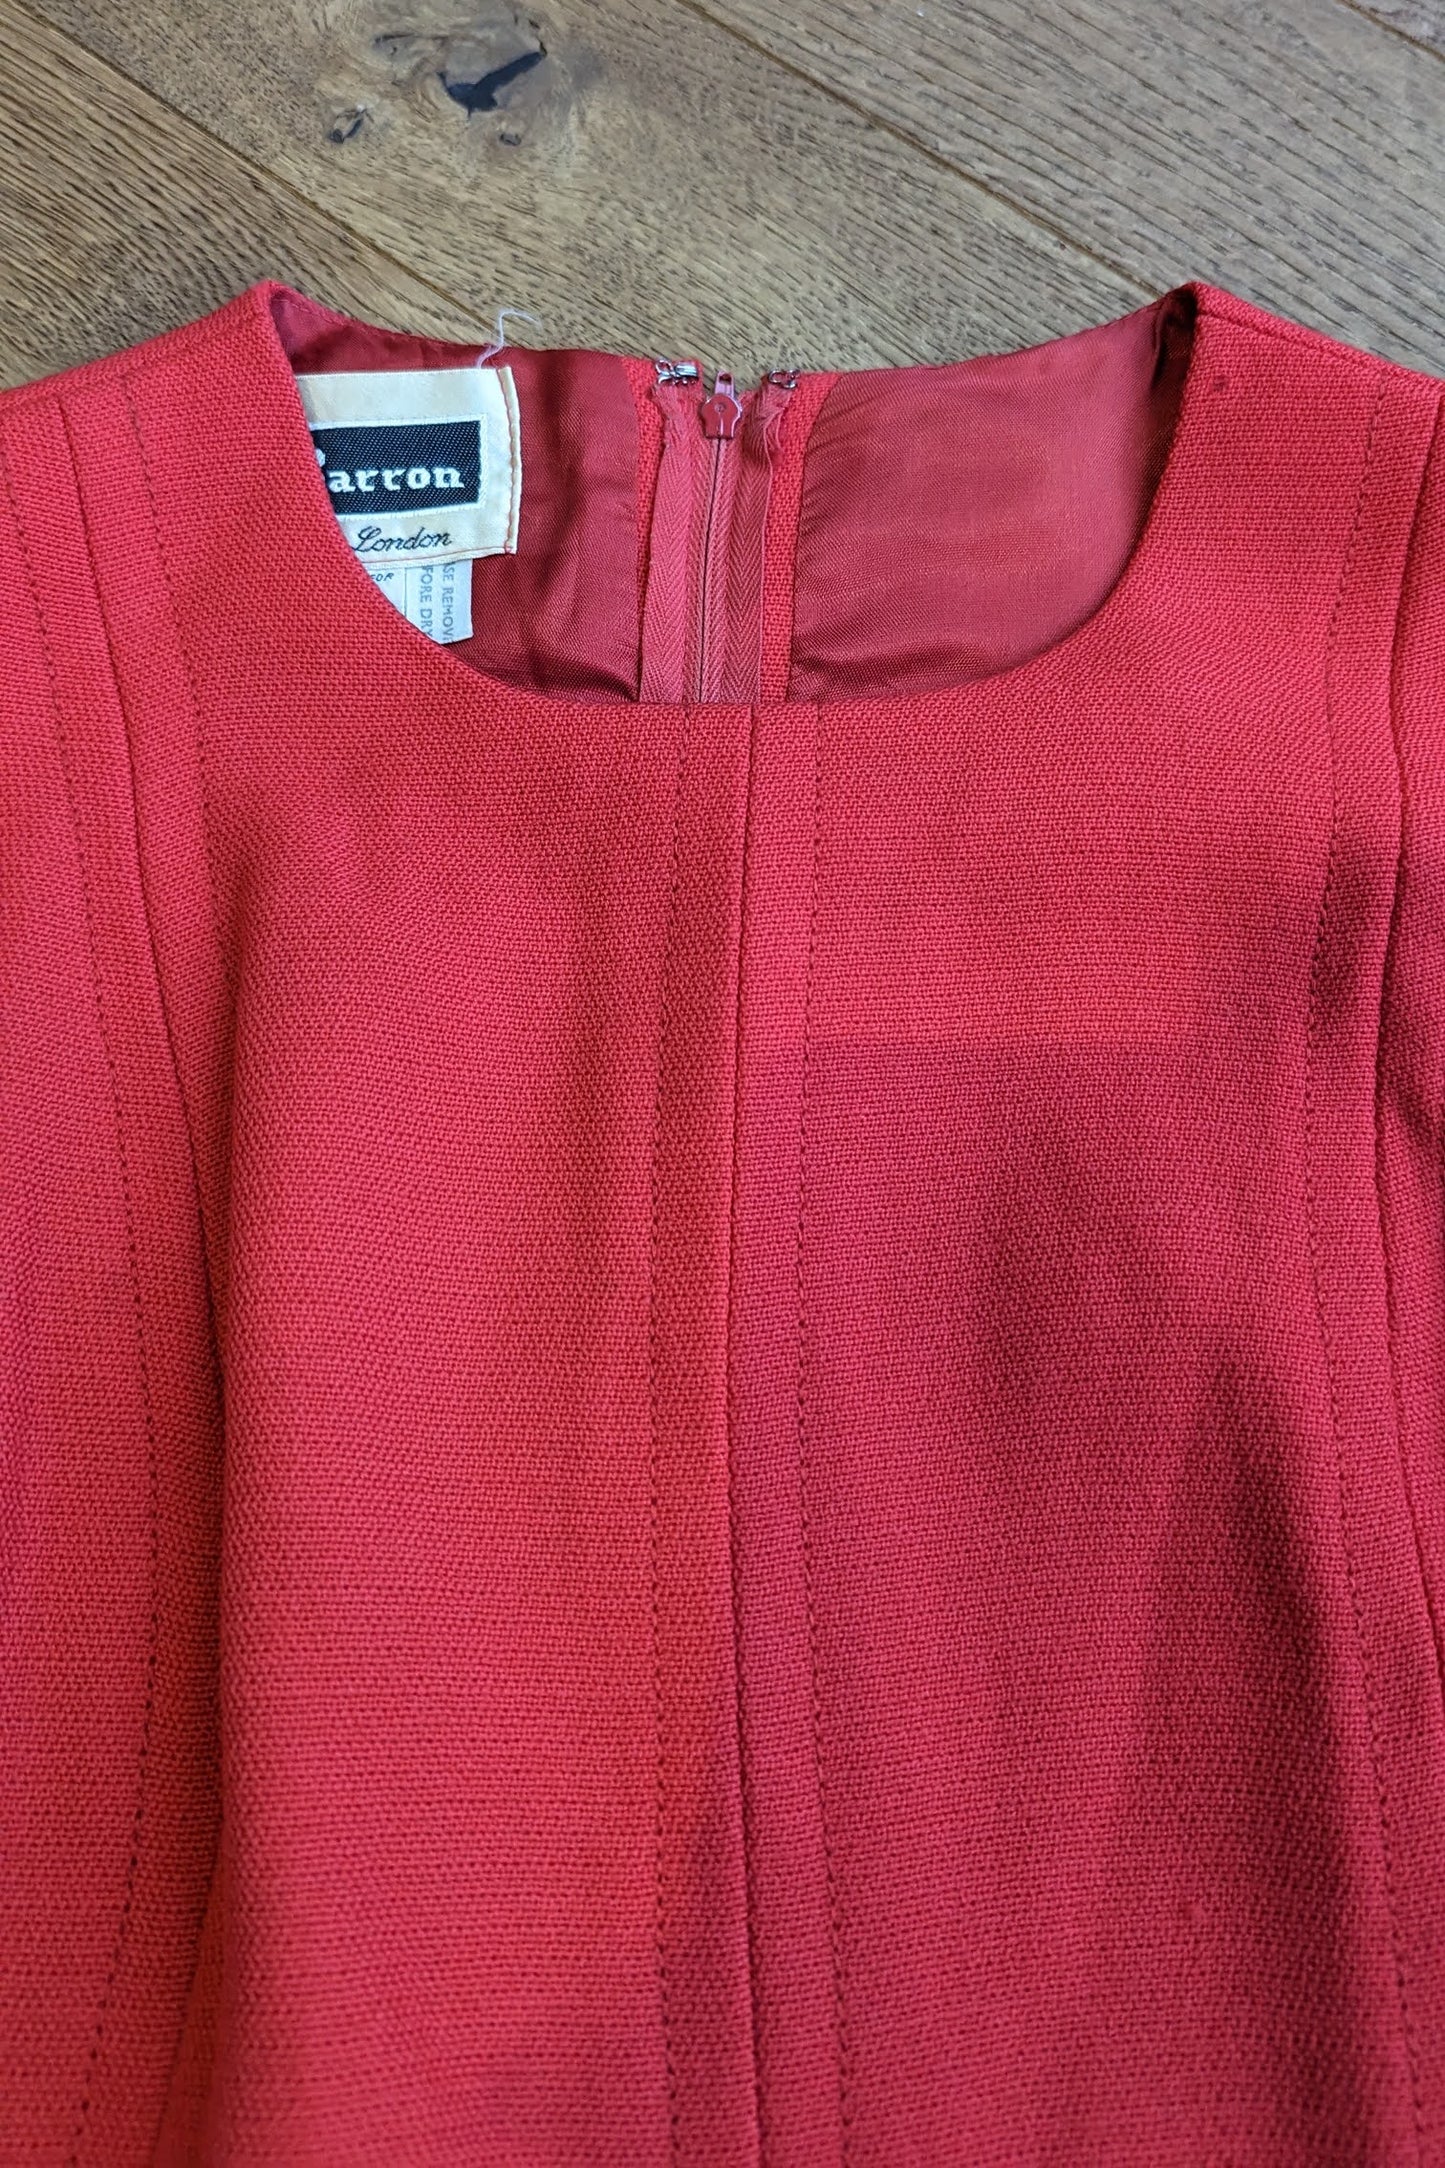 1960s Red Wool Shift Dress